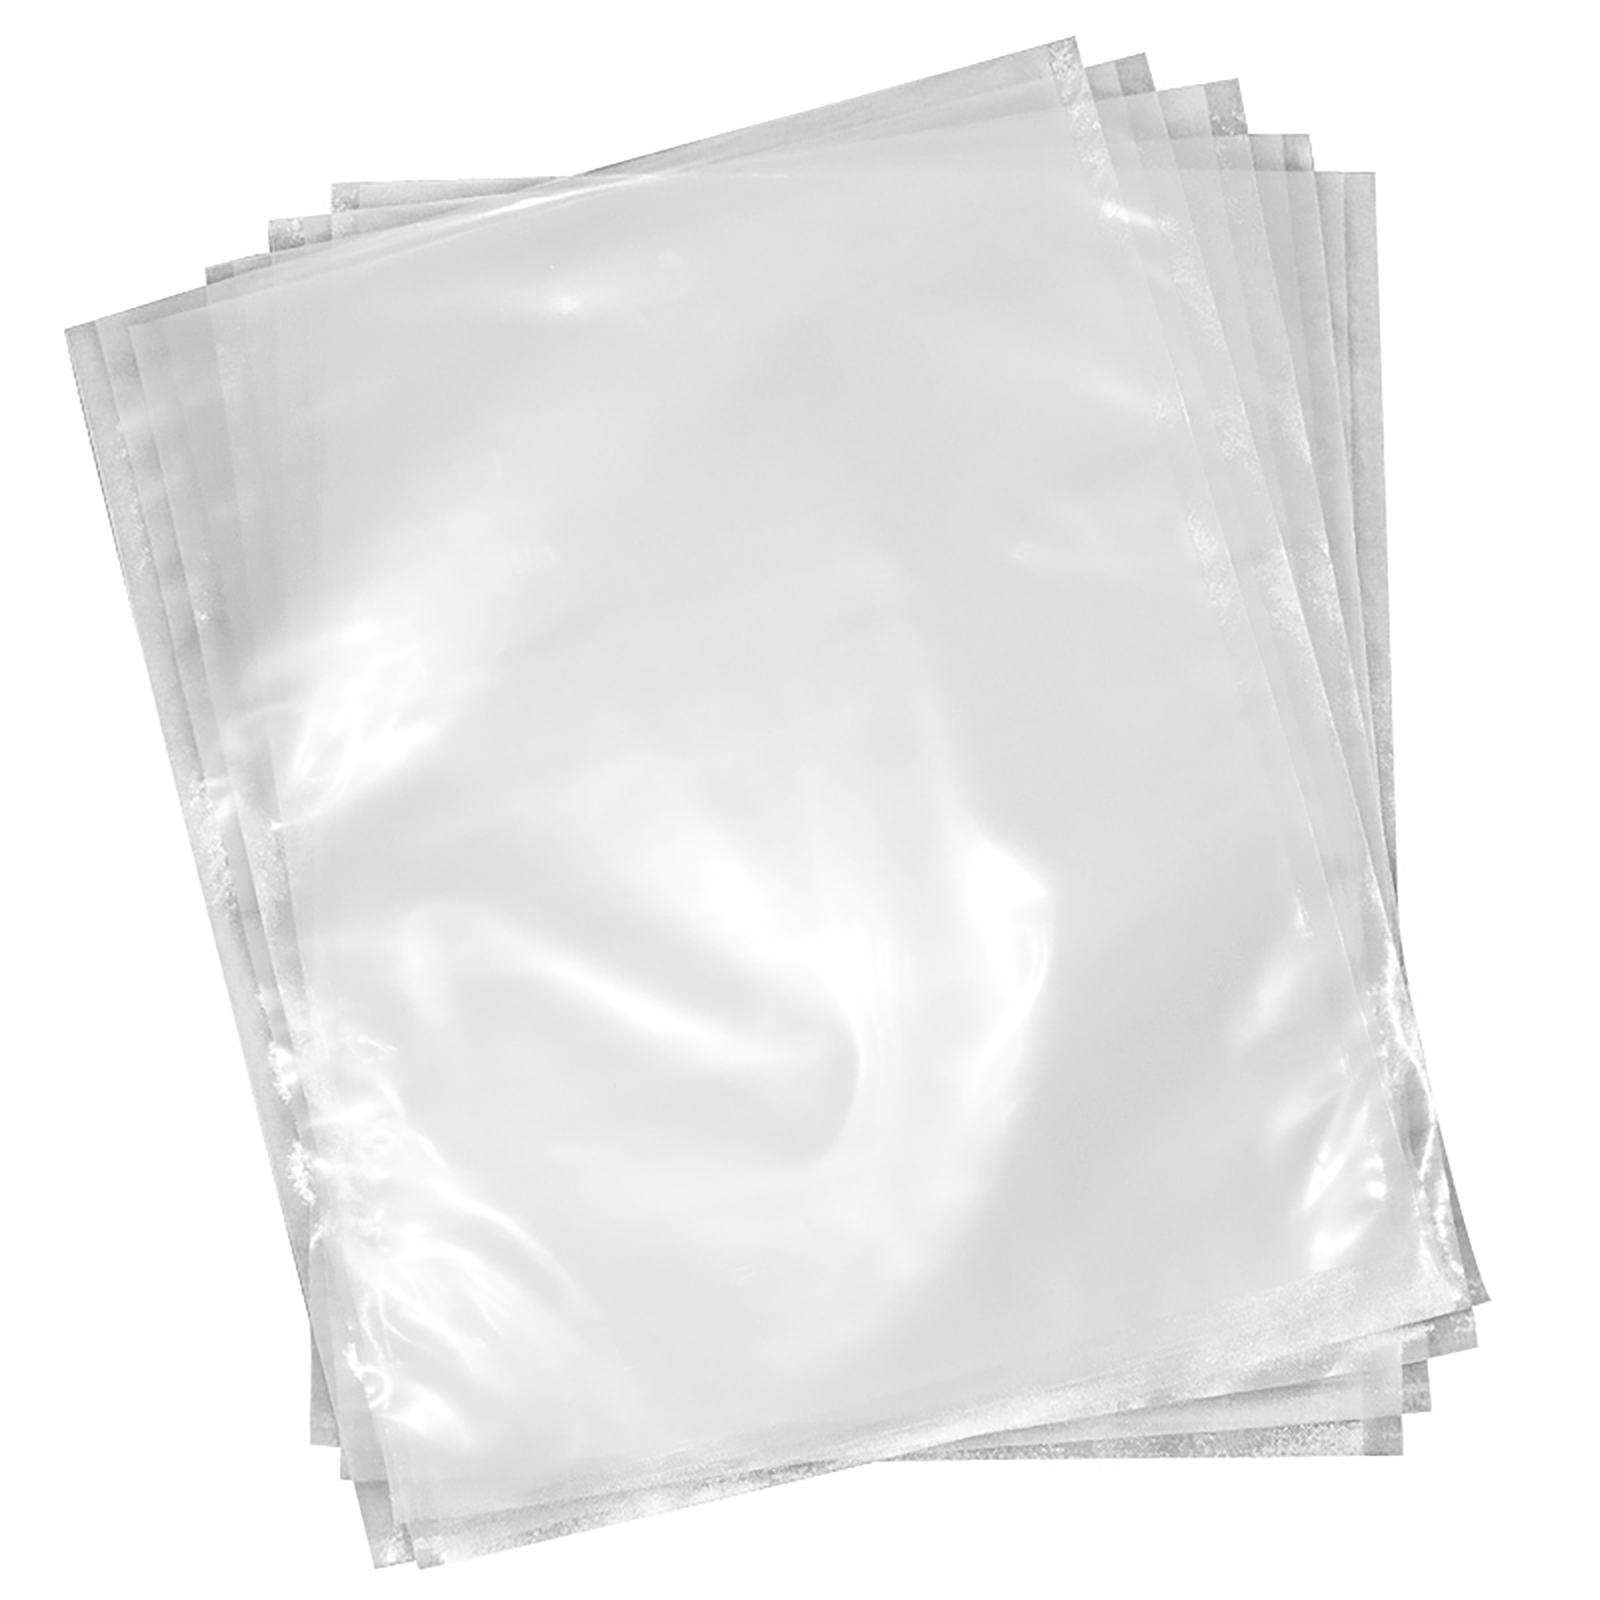 Pint Size 6x10 Small Vacuum Seal Bags - 1,000 Bag Bulk Case